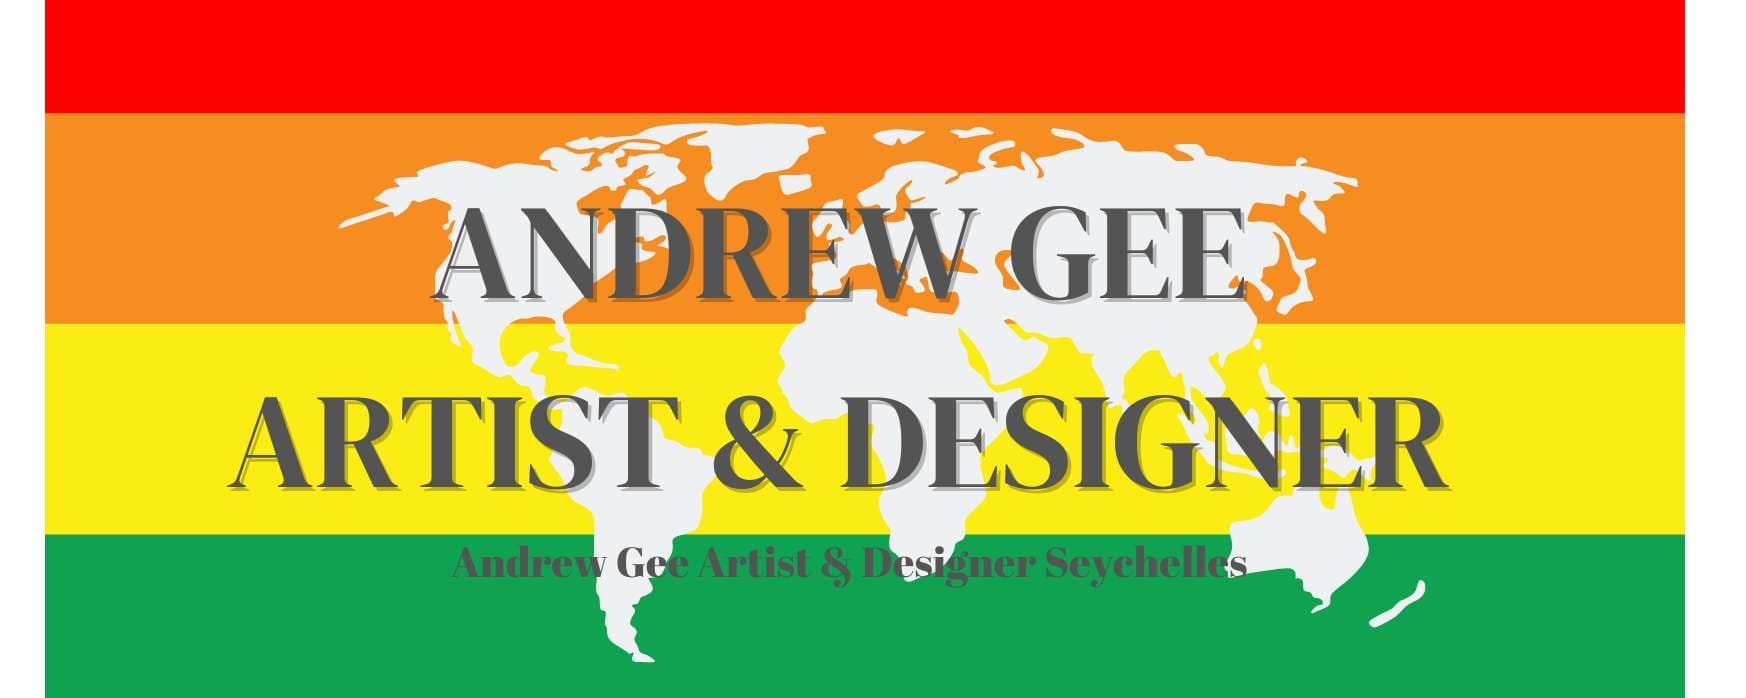 Andrew Gee Artist & Designer